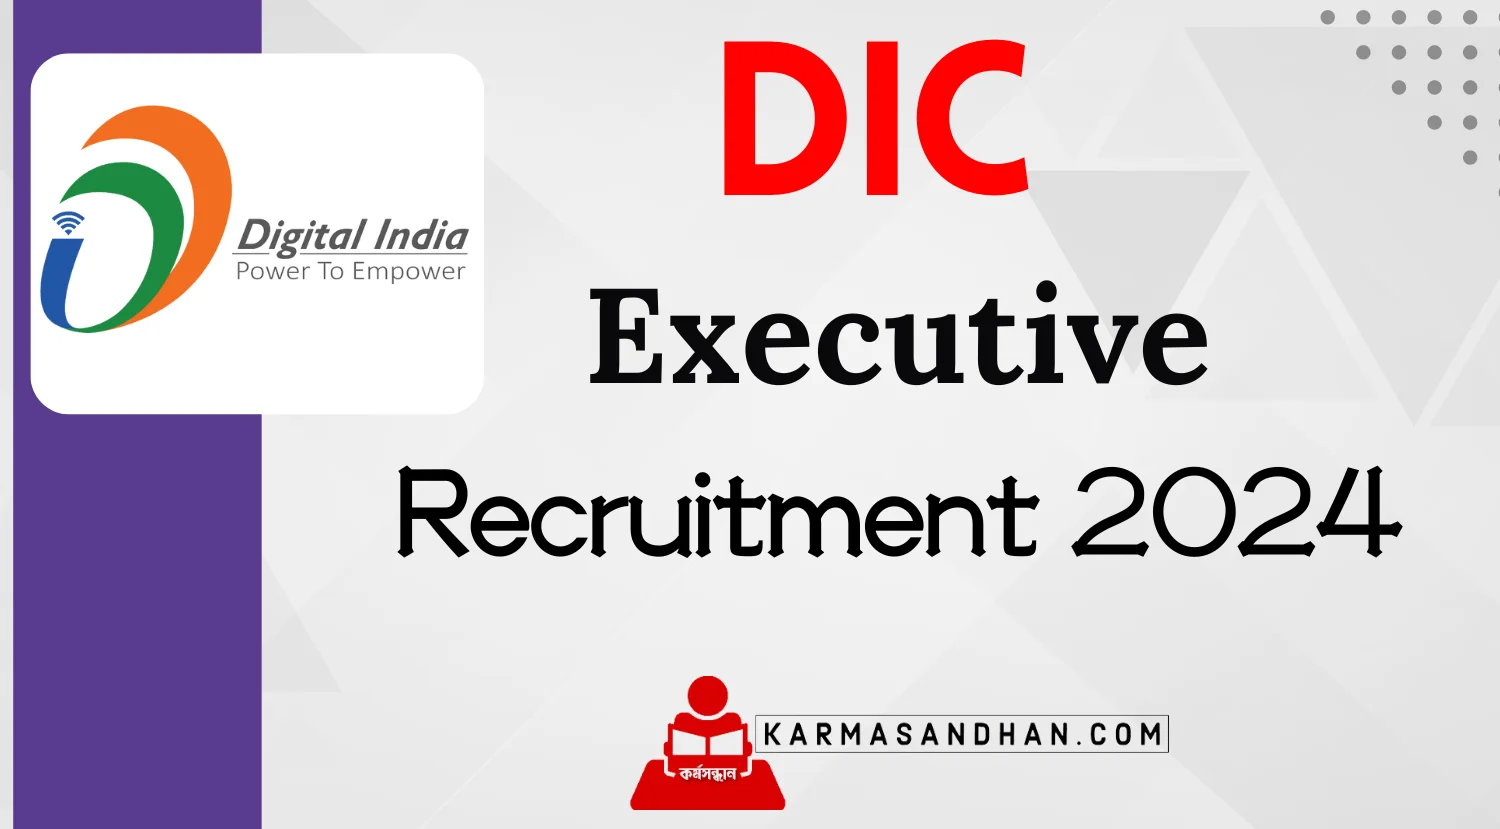 DIC Executive Recruitment 2024